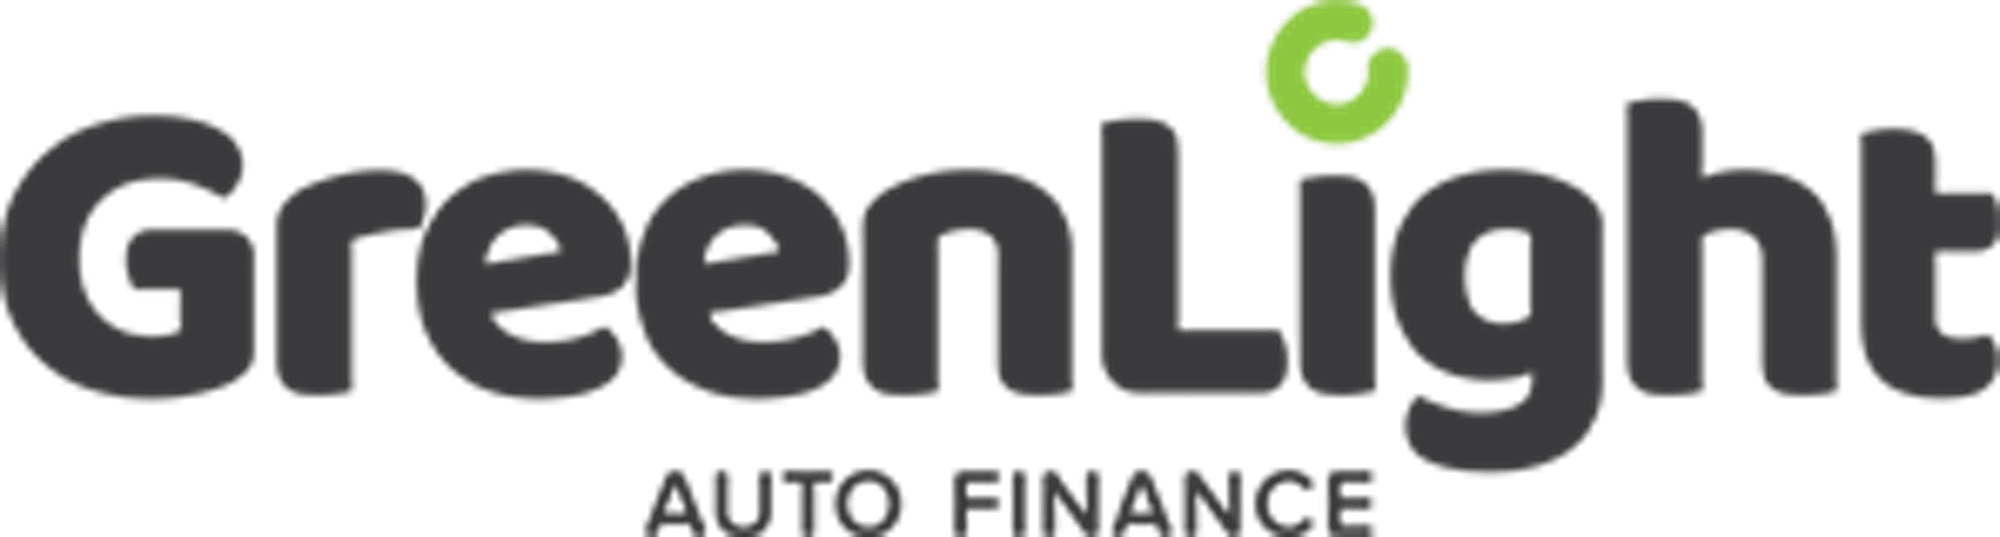 Greenlight Auto Finance